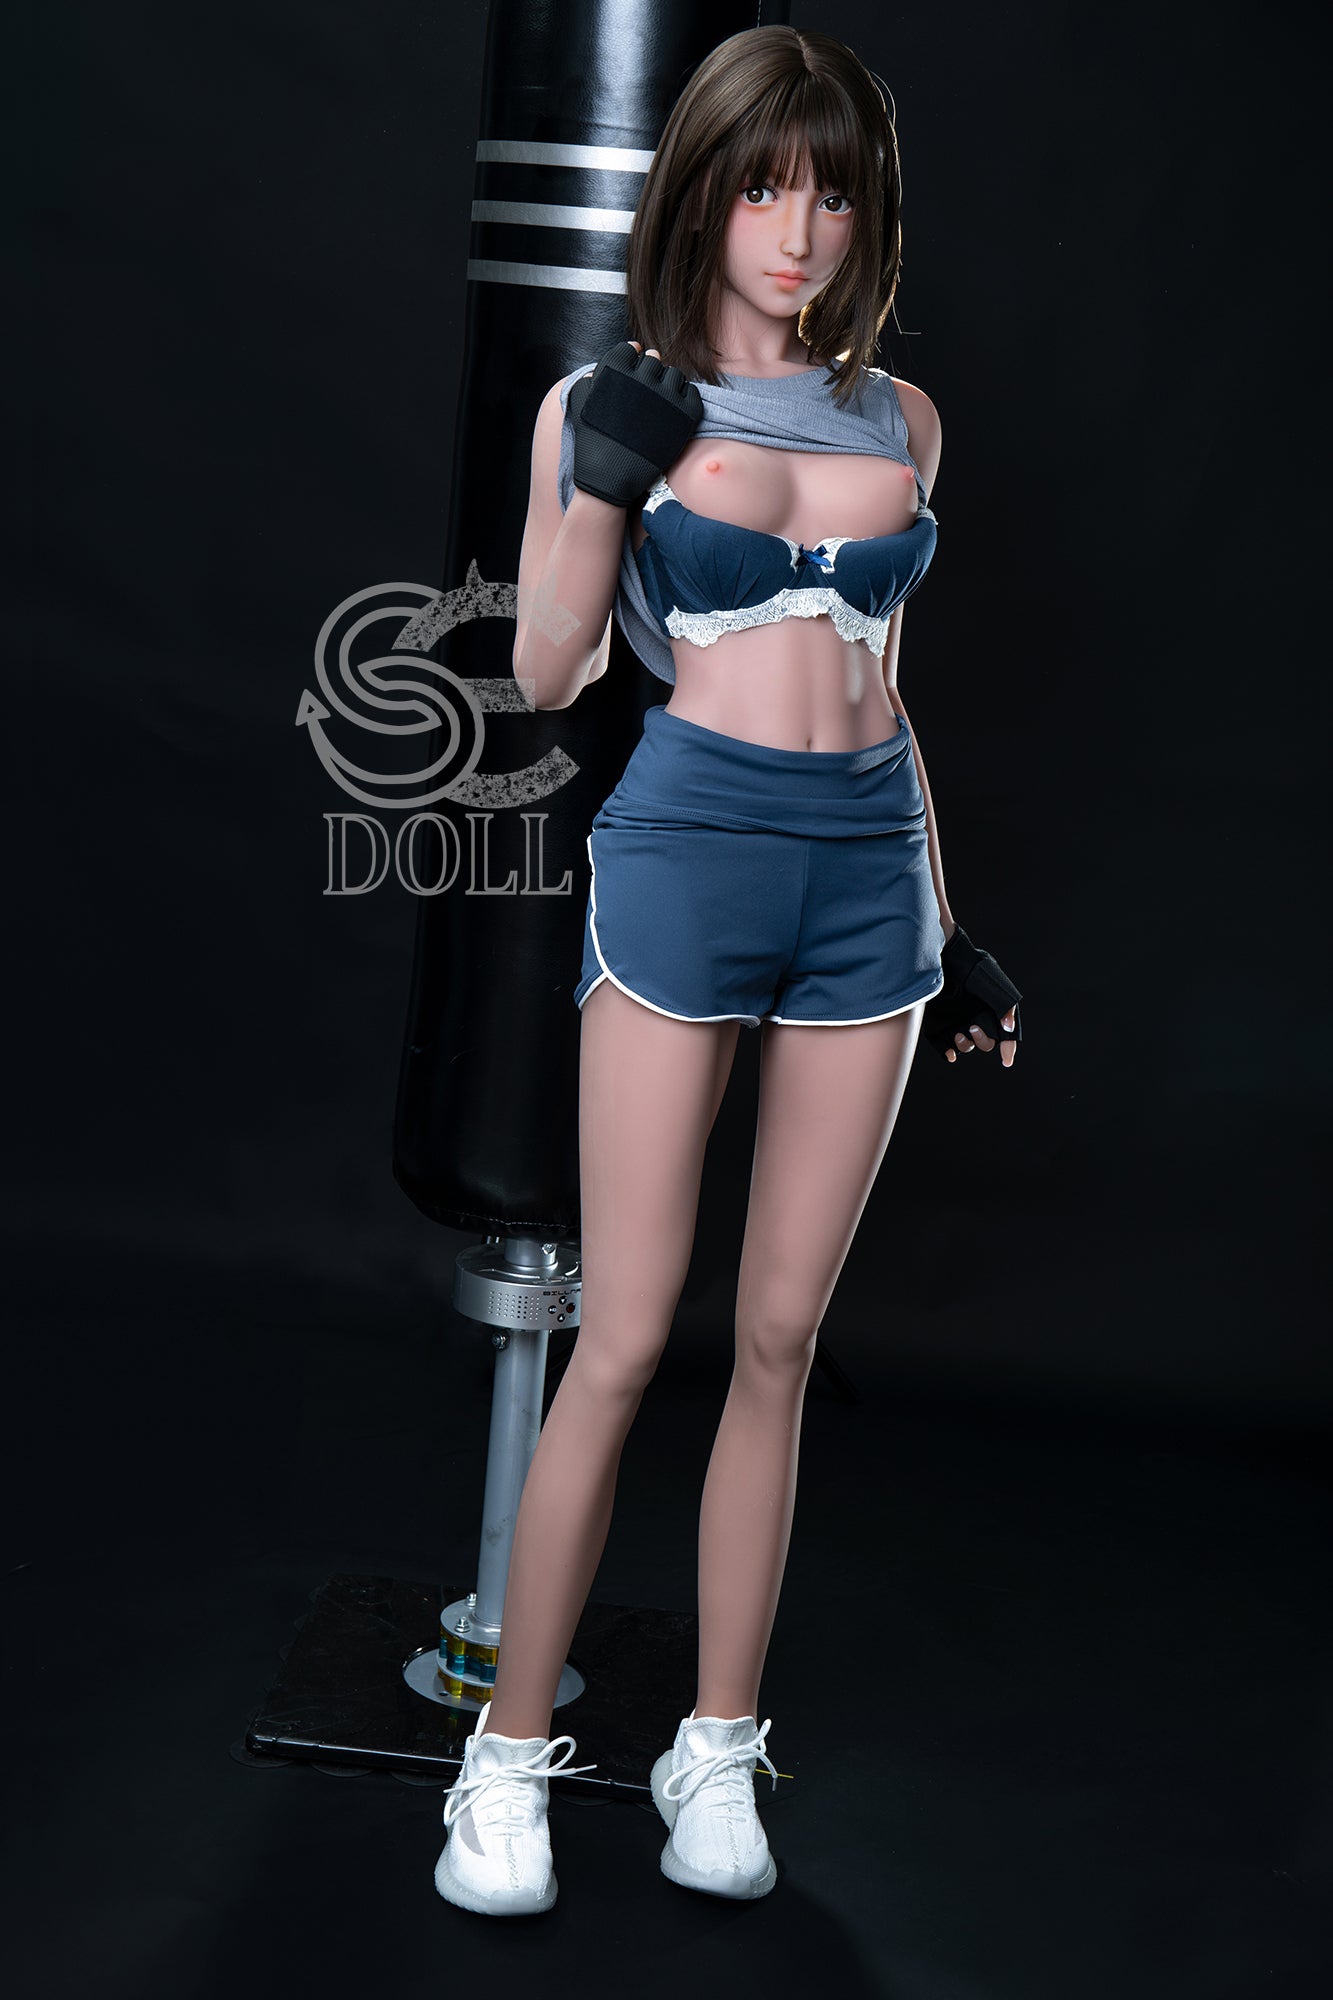 SEDOLL 166 cm C TPE - Hirono | Buy Sex Dolls at DOLLS ACTUALLY